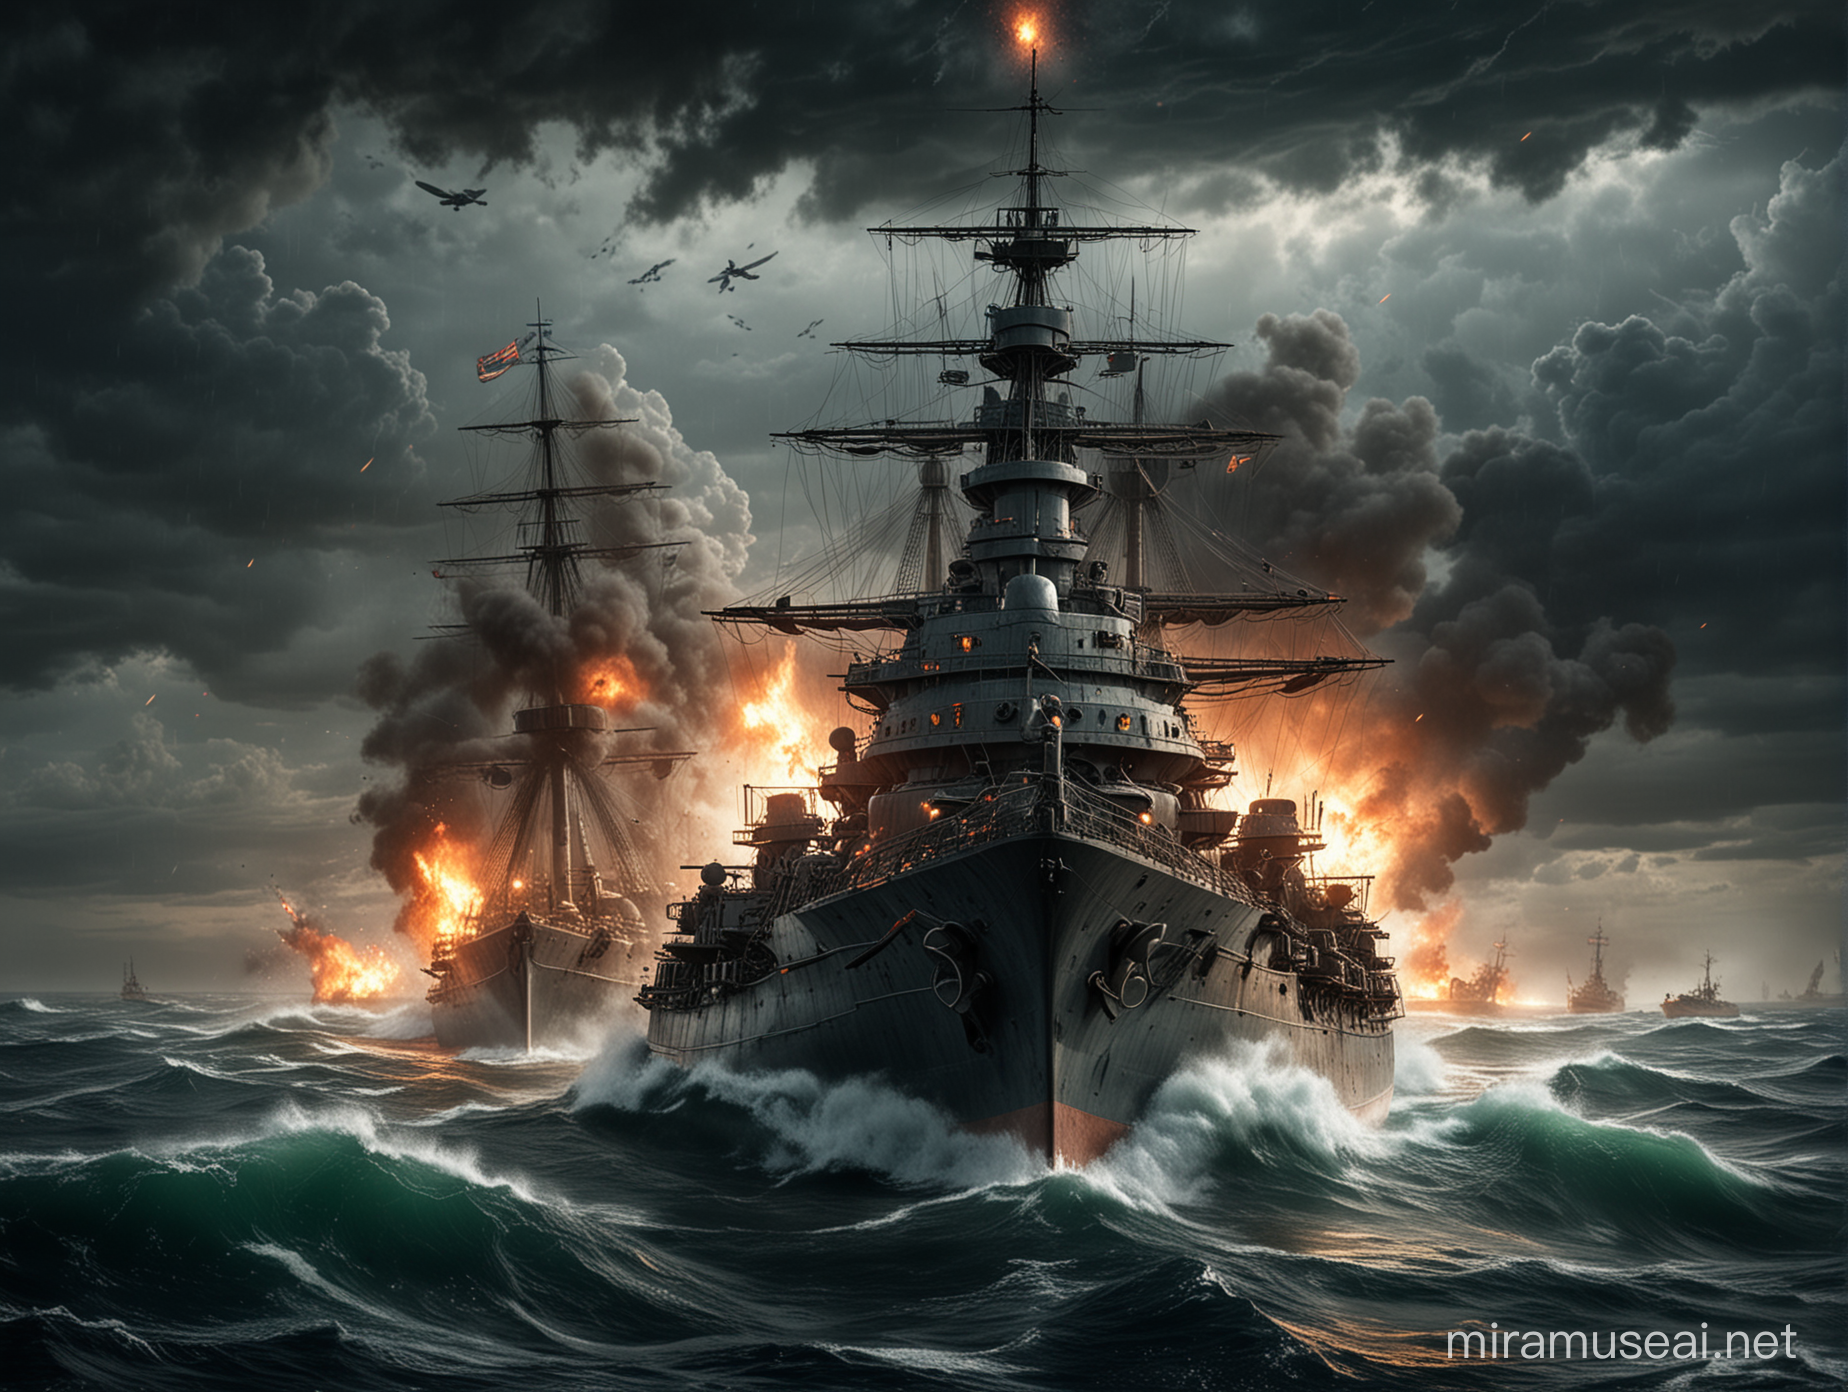 Intense Naval Battle Battleship Engulfed in Flames